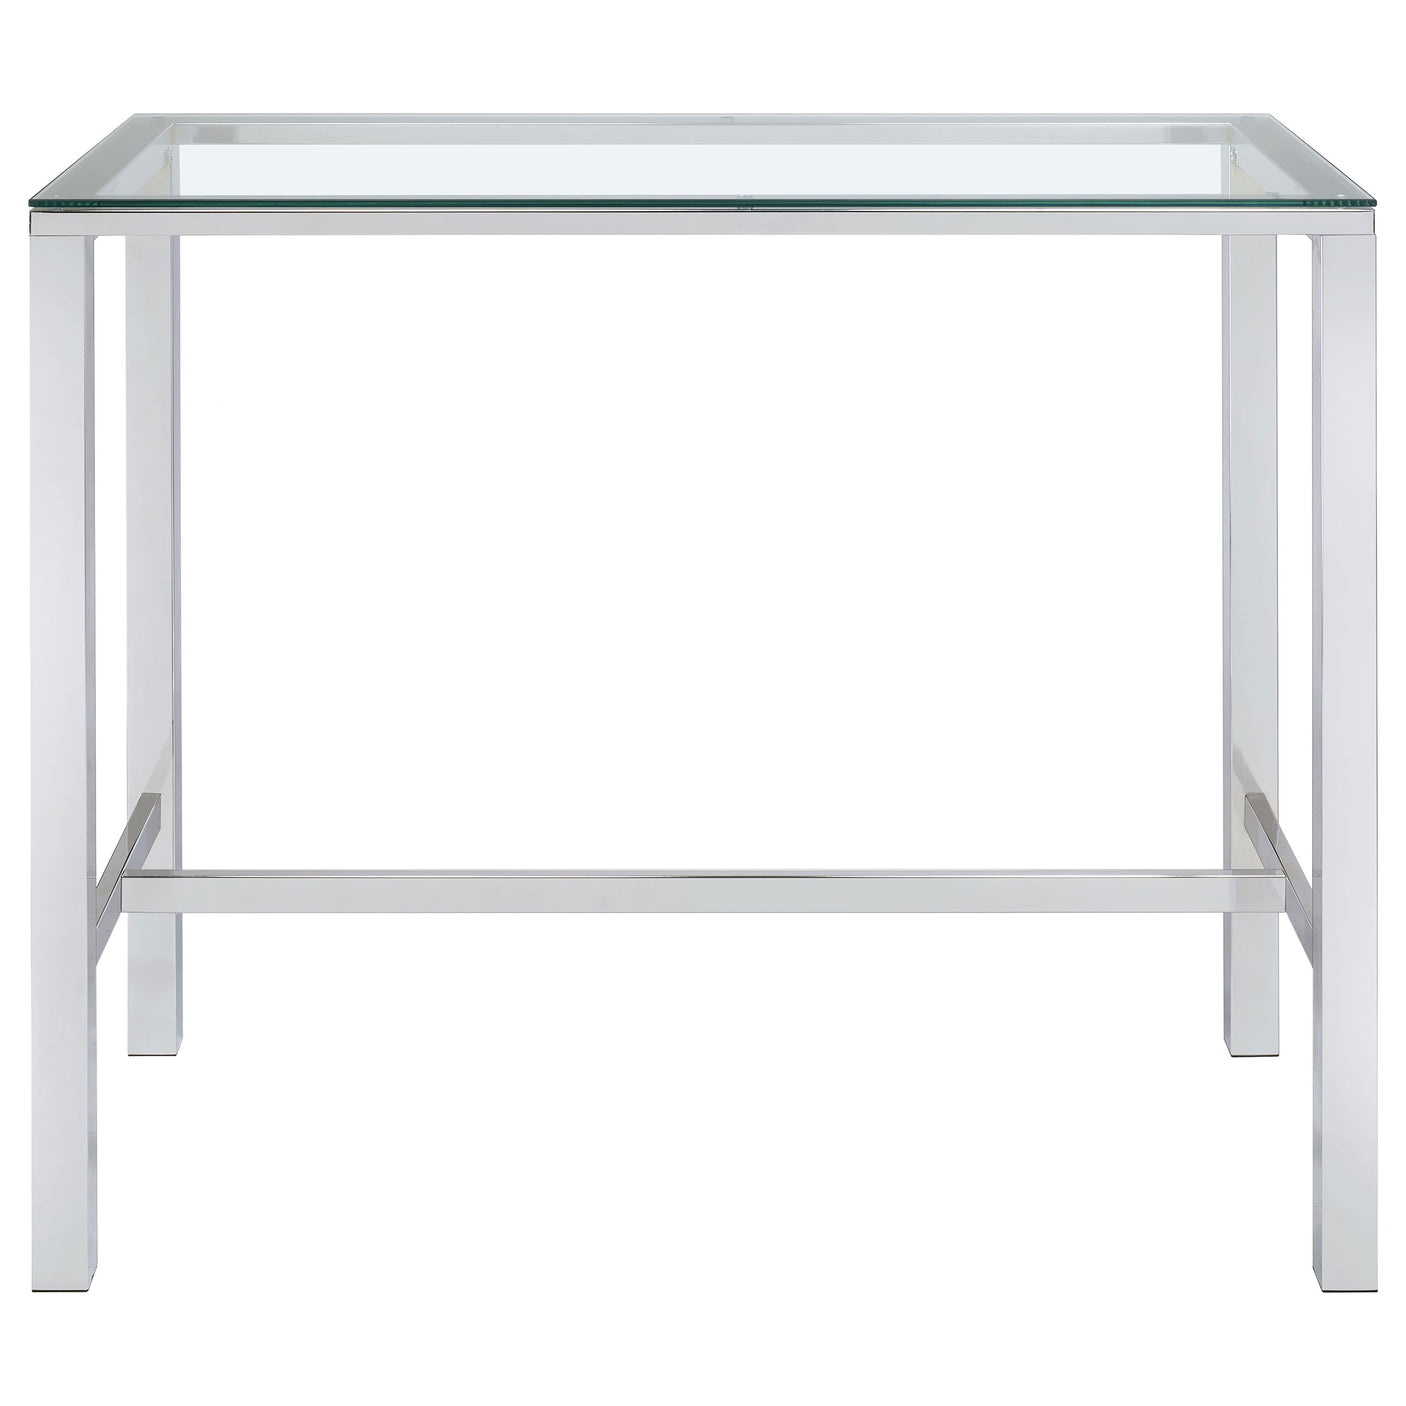 Bar Table - Tolbert Bar Table with Glass Top Chrome